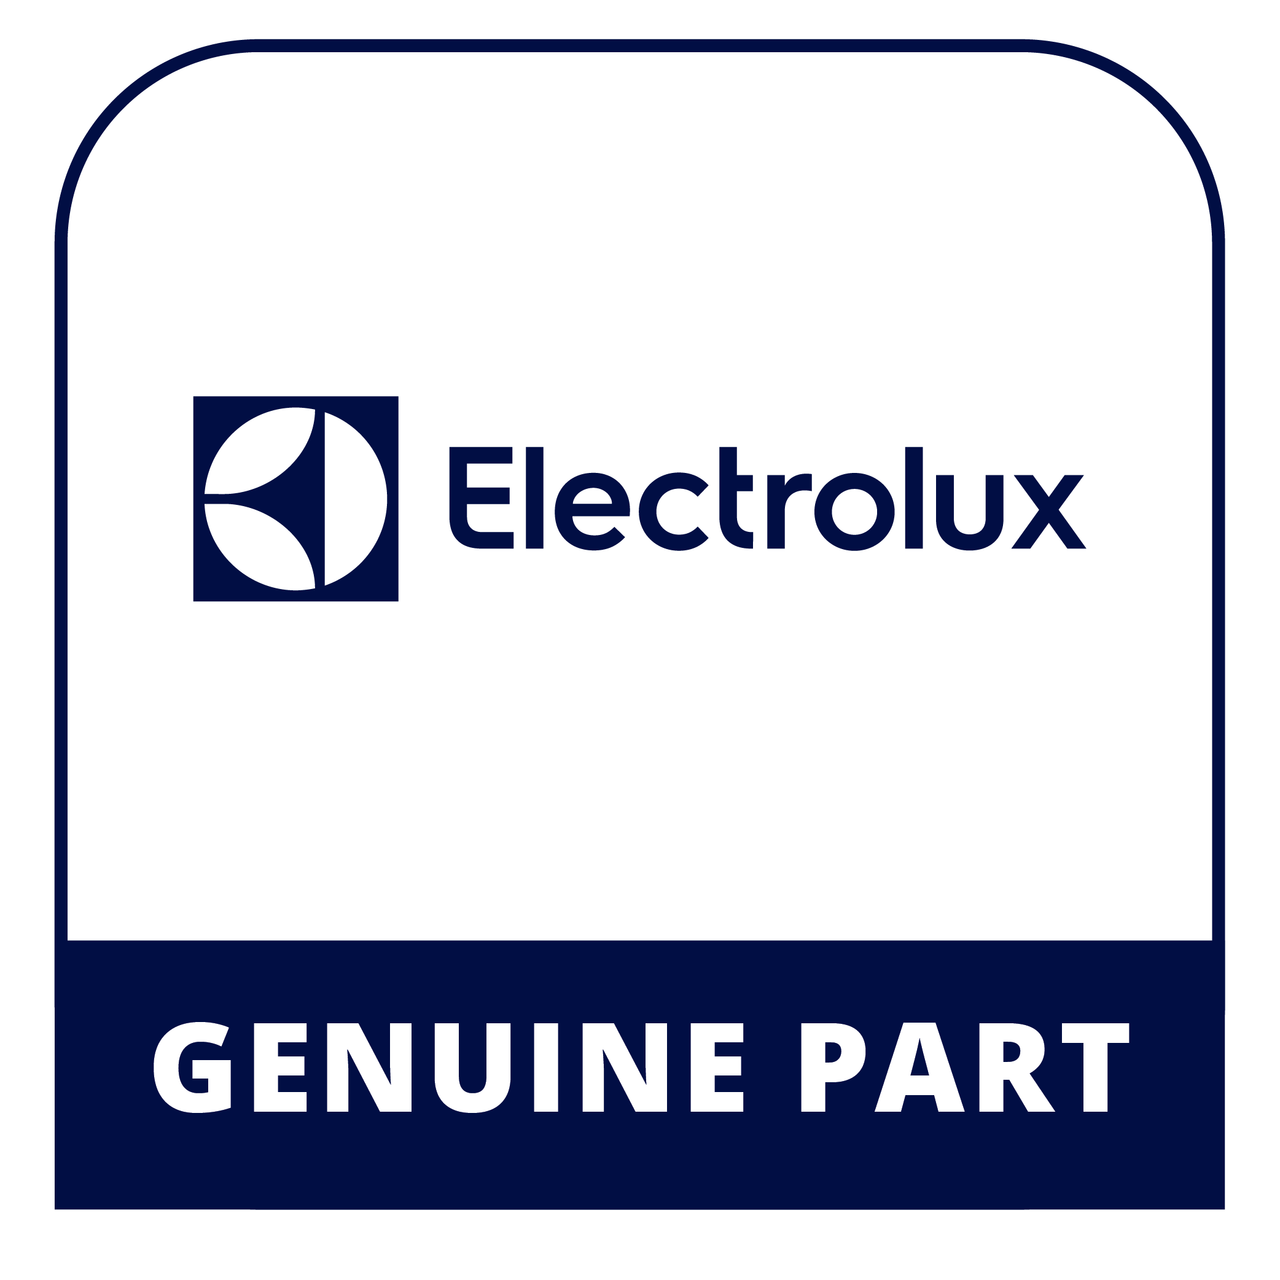 Frigidaire - Electrolux 318242250 Knob - Genuine Electrolux Part